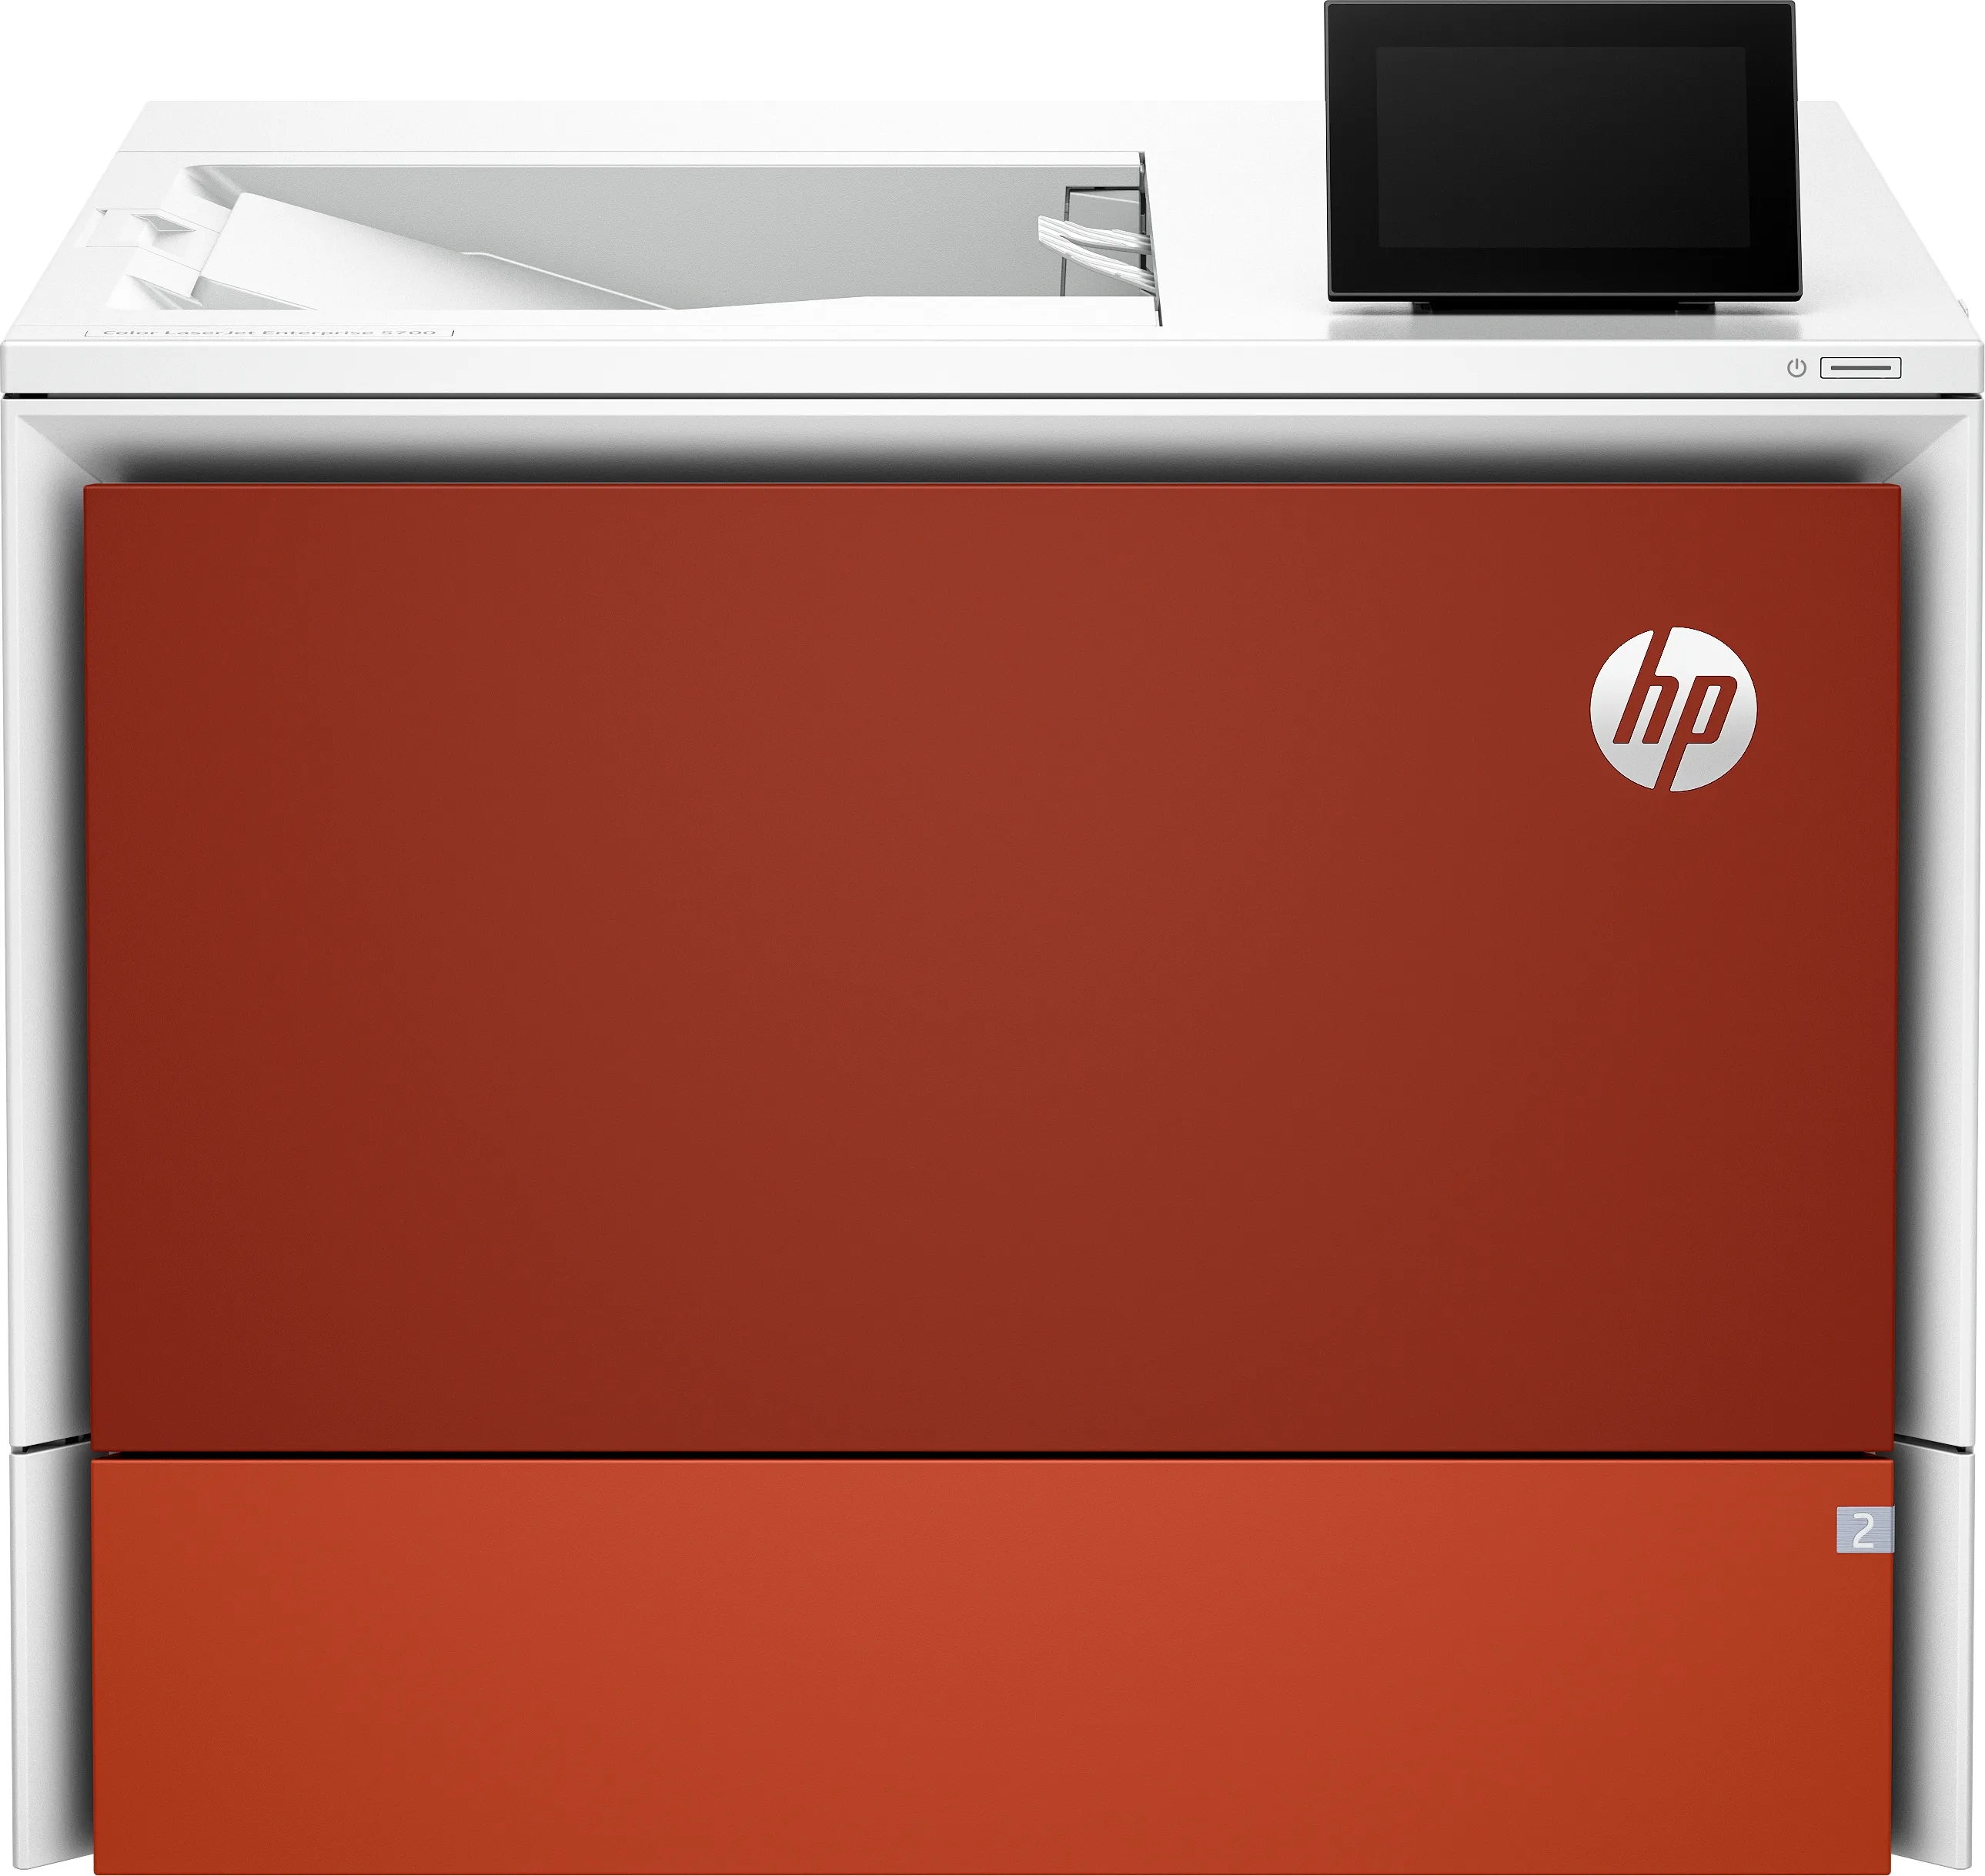 Vente HP Clr LaserJet Red Storage Stand HP au meilleur prix - visuel 4